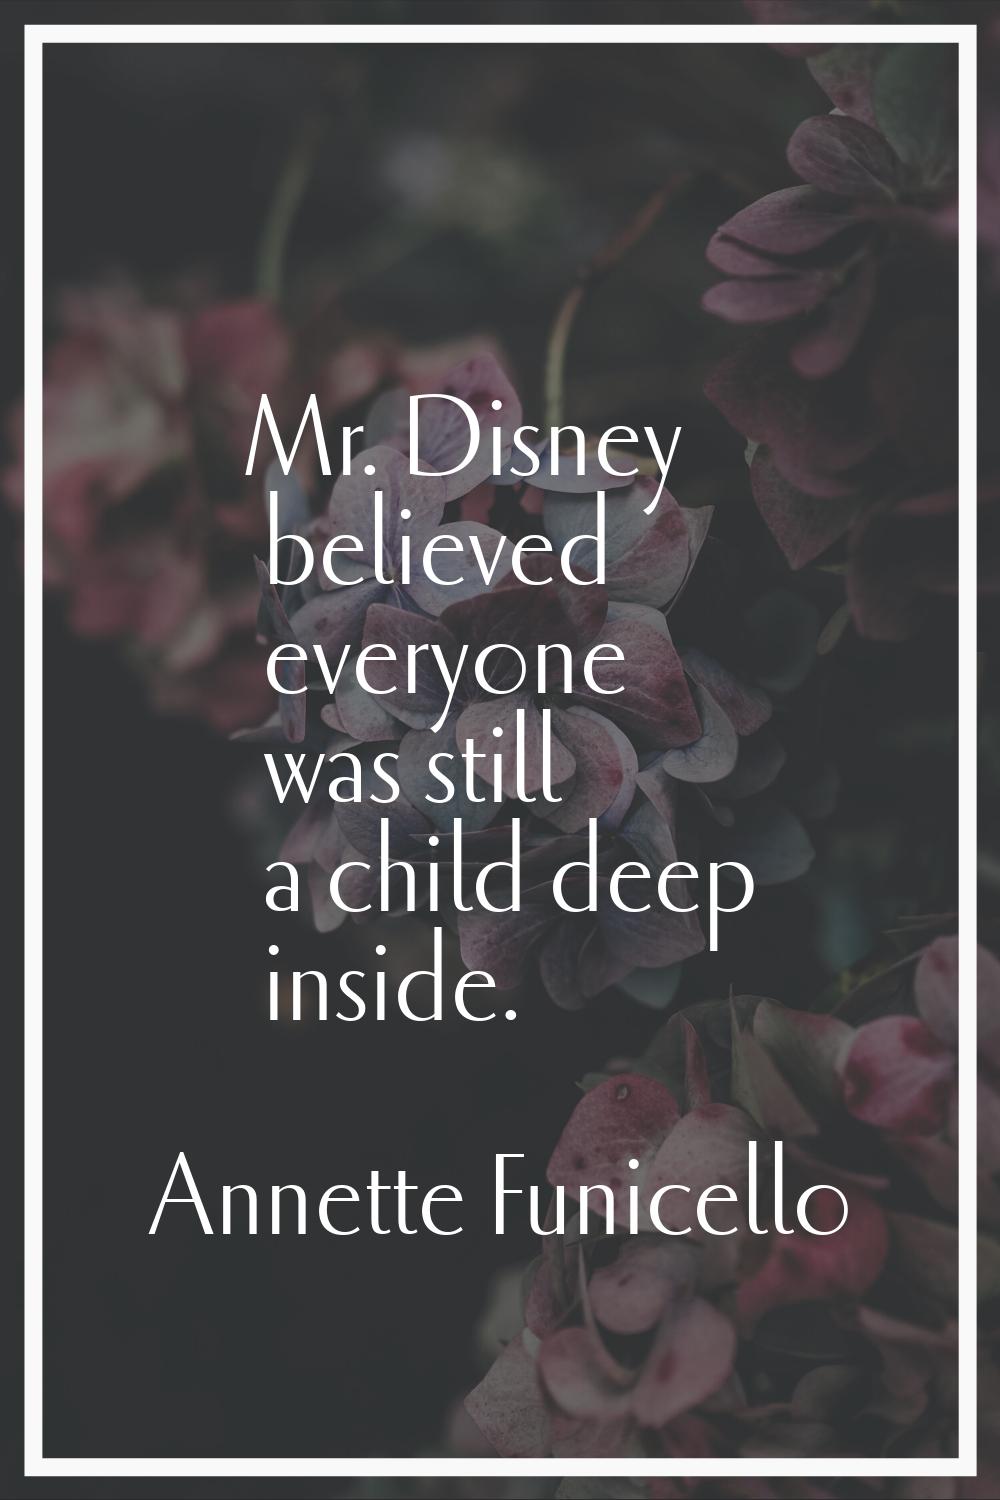 Mr. Disney believed everyone was still a child deep inside.